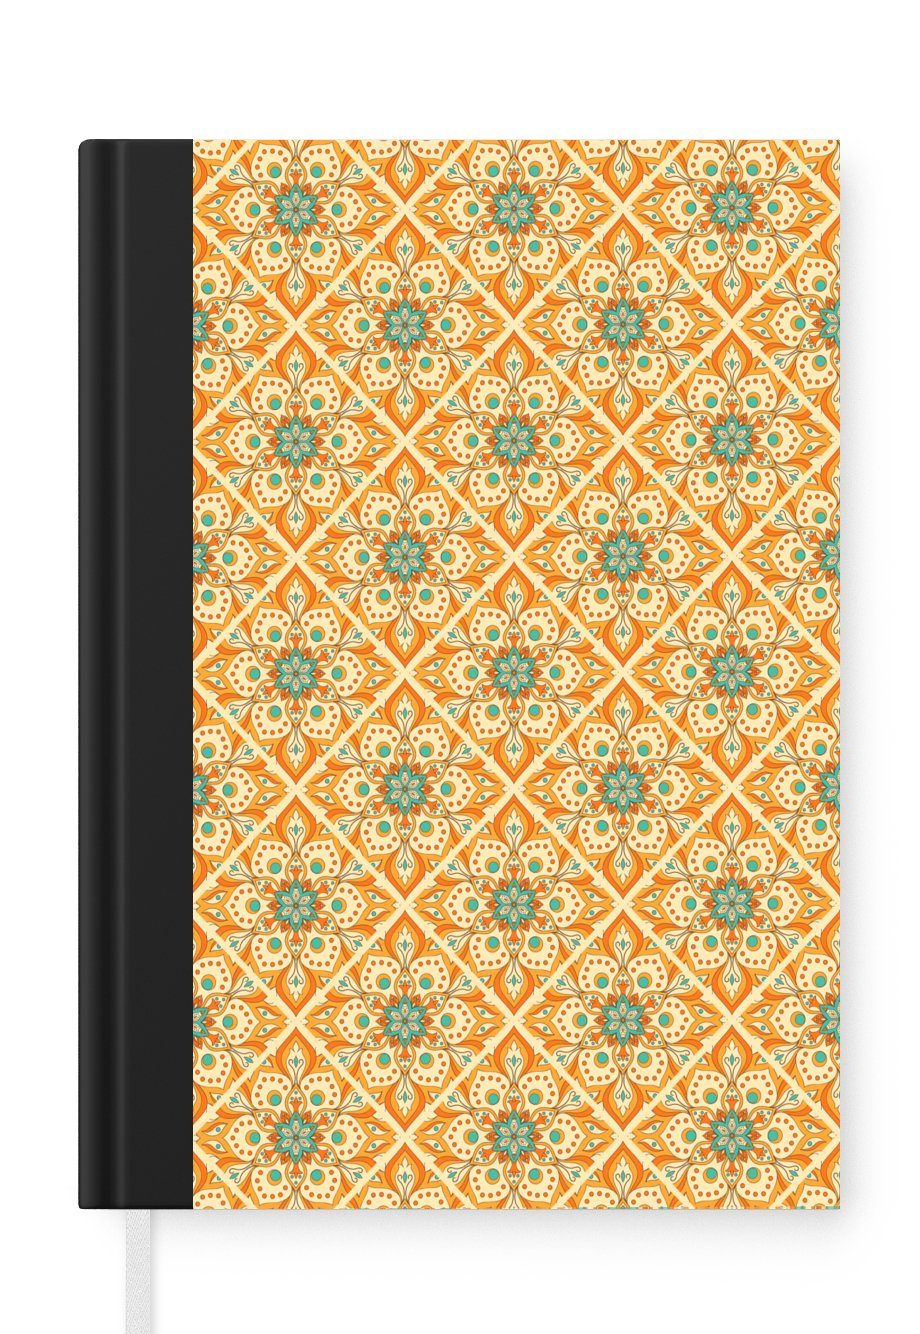 MuchoWow Notizbuch Mandala - Boho - Blumen - Orange - Muster, Journal, Merkzettel, Tagebuch, Notizheft, A5, 98 Seiten, Haushaltsbuch